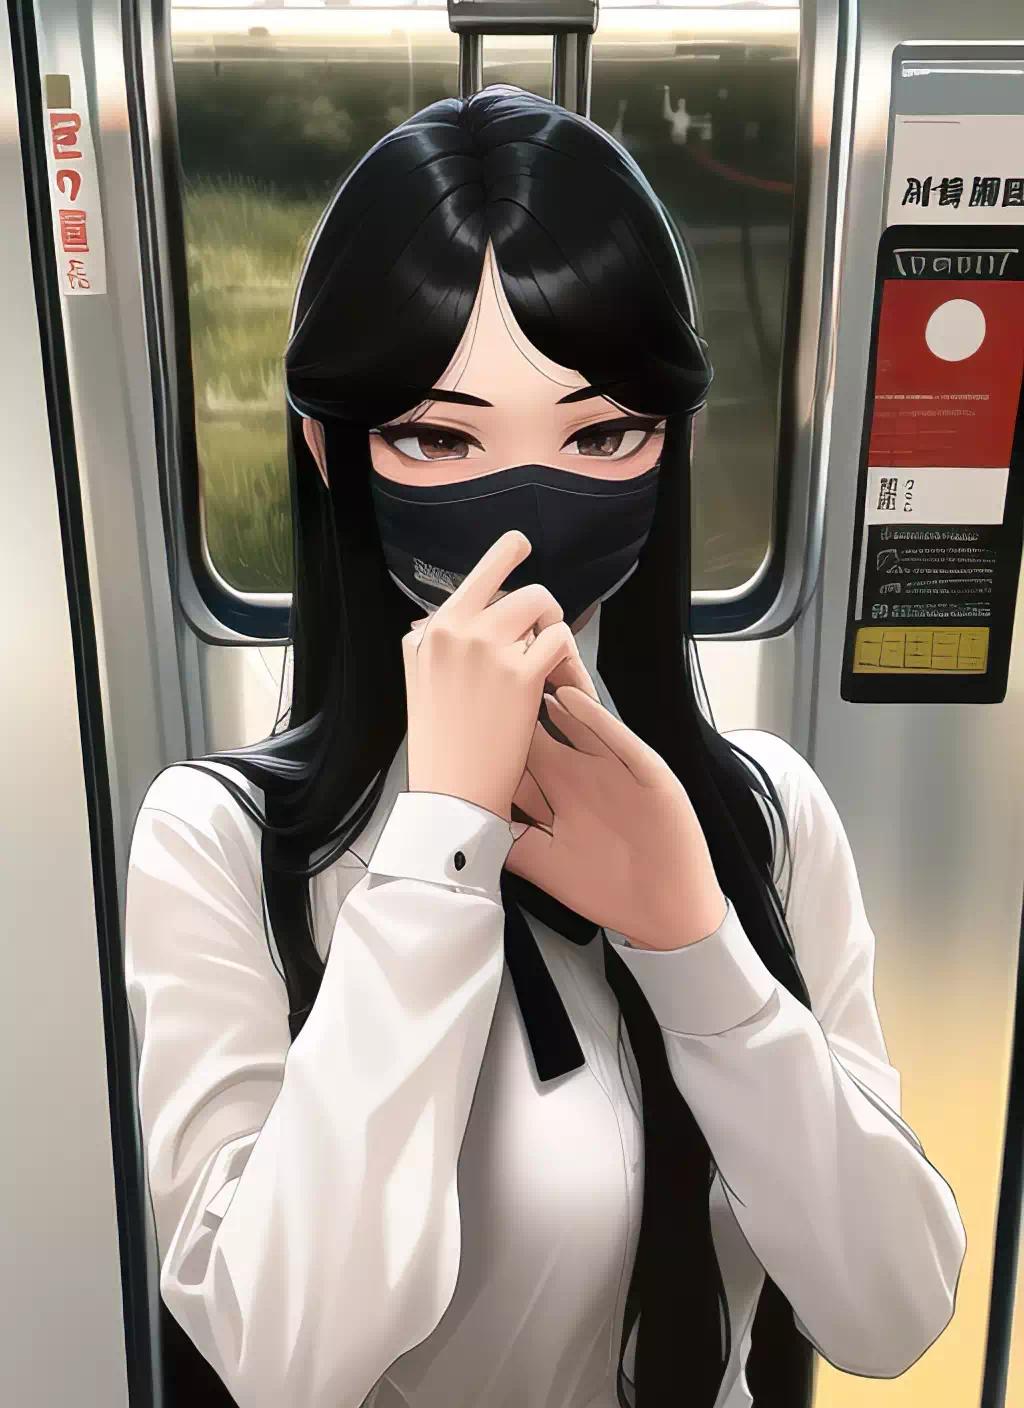 Girl in the train